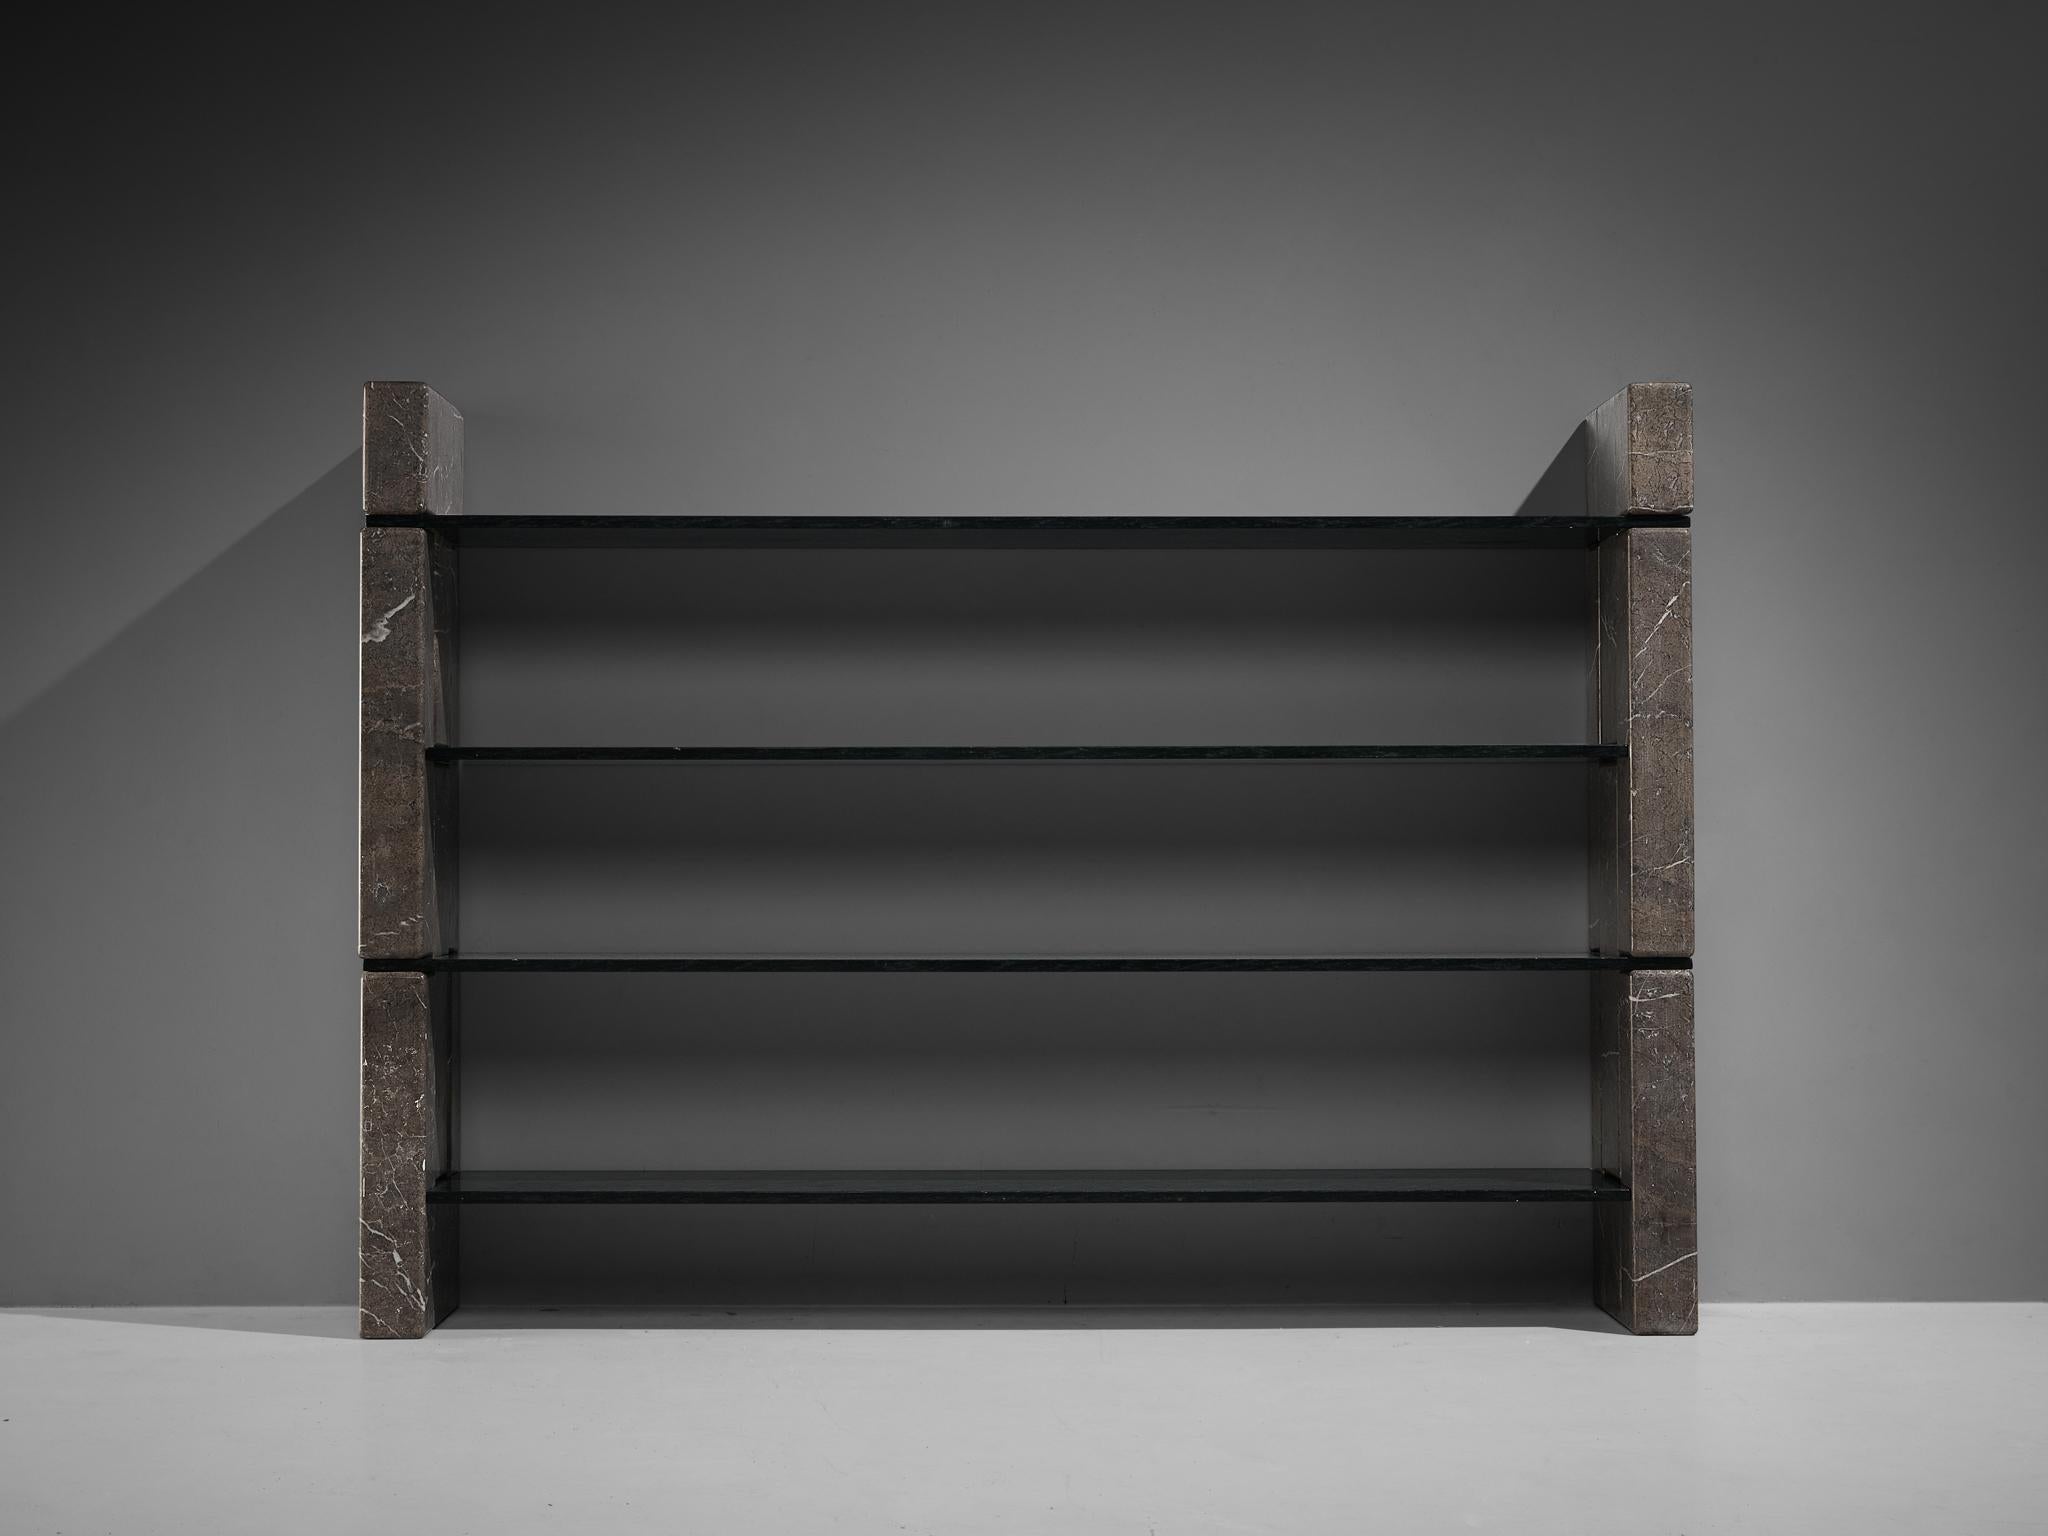 cinder block and wood shelves